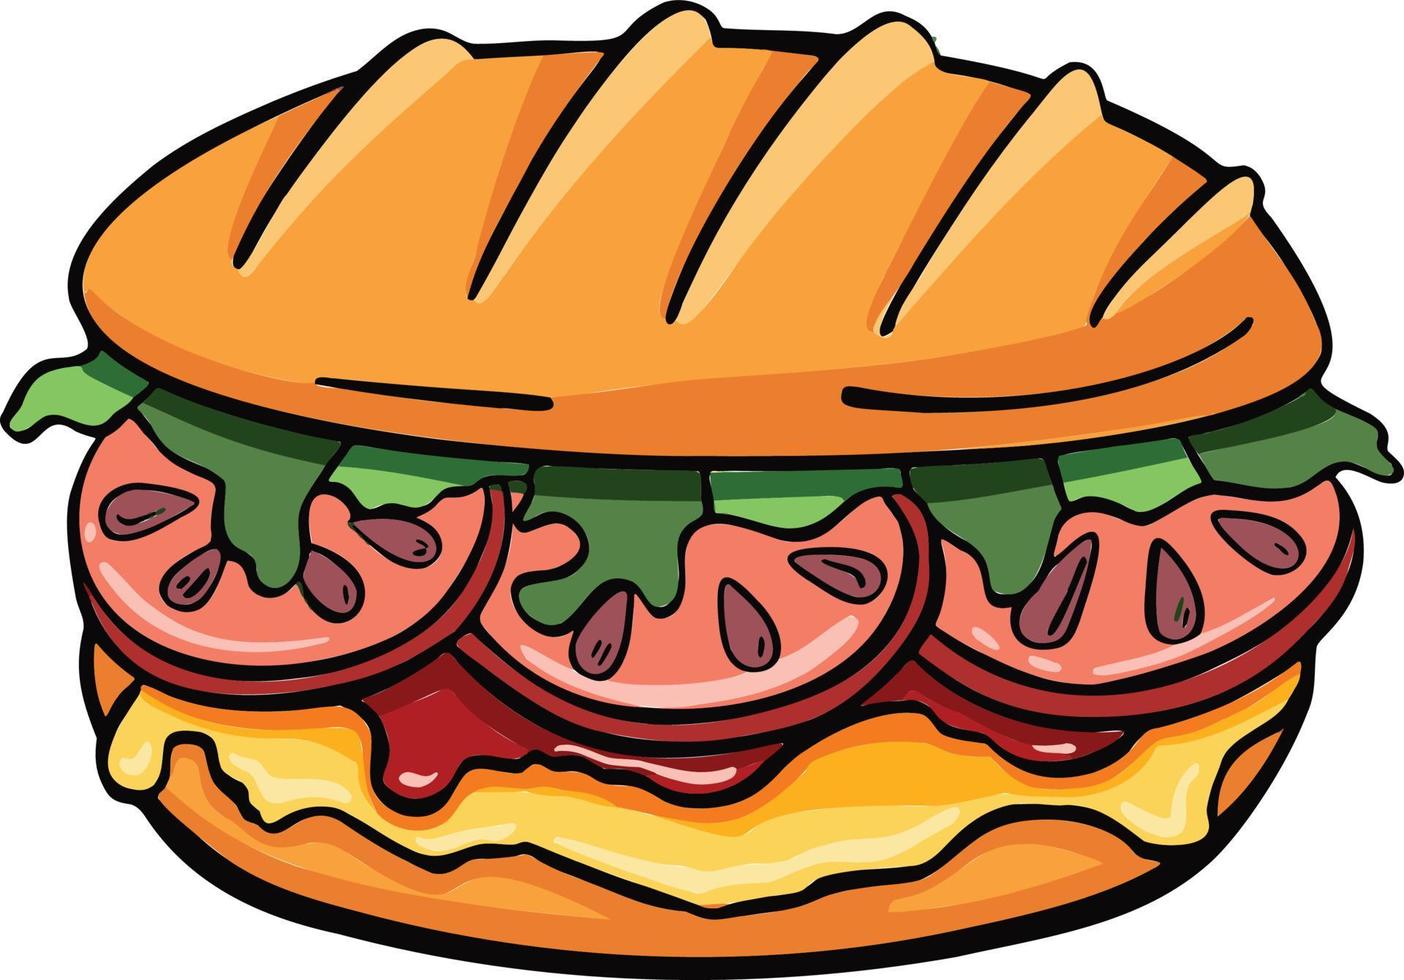 panini aislado sobre fondo blanco. diseño vectorial de sándwich italiano. icono de sándwich colorido. queso panini con verduras de jamón y salsa. famoso vector de comida rápida italiana.